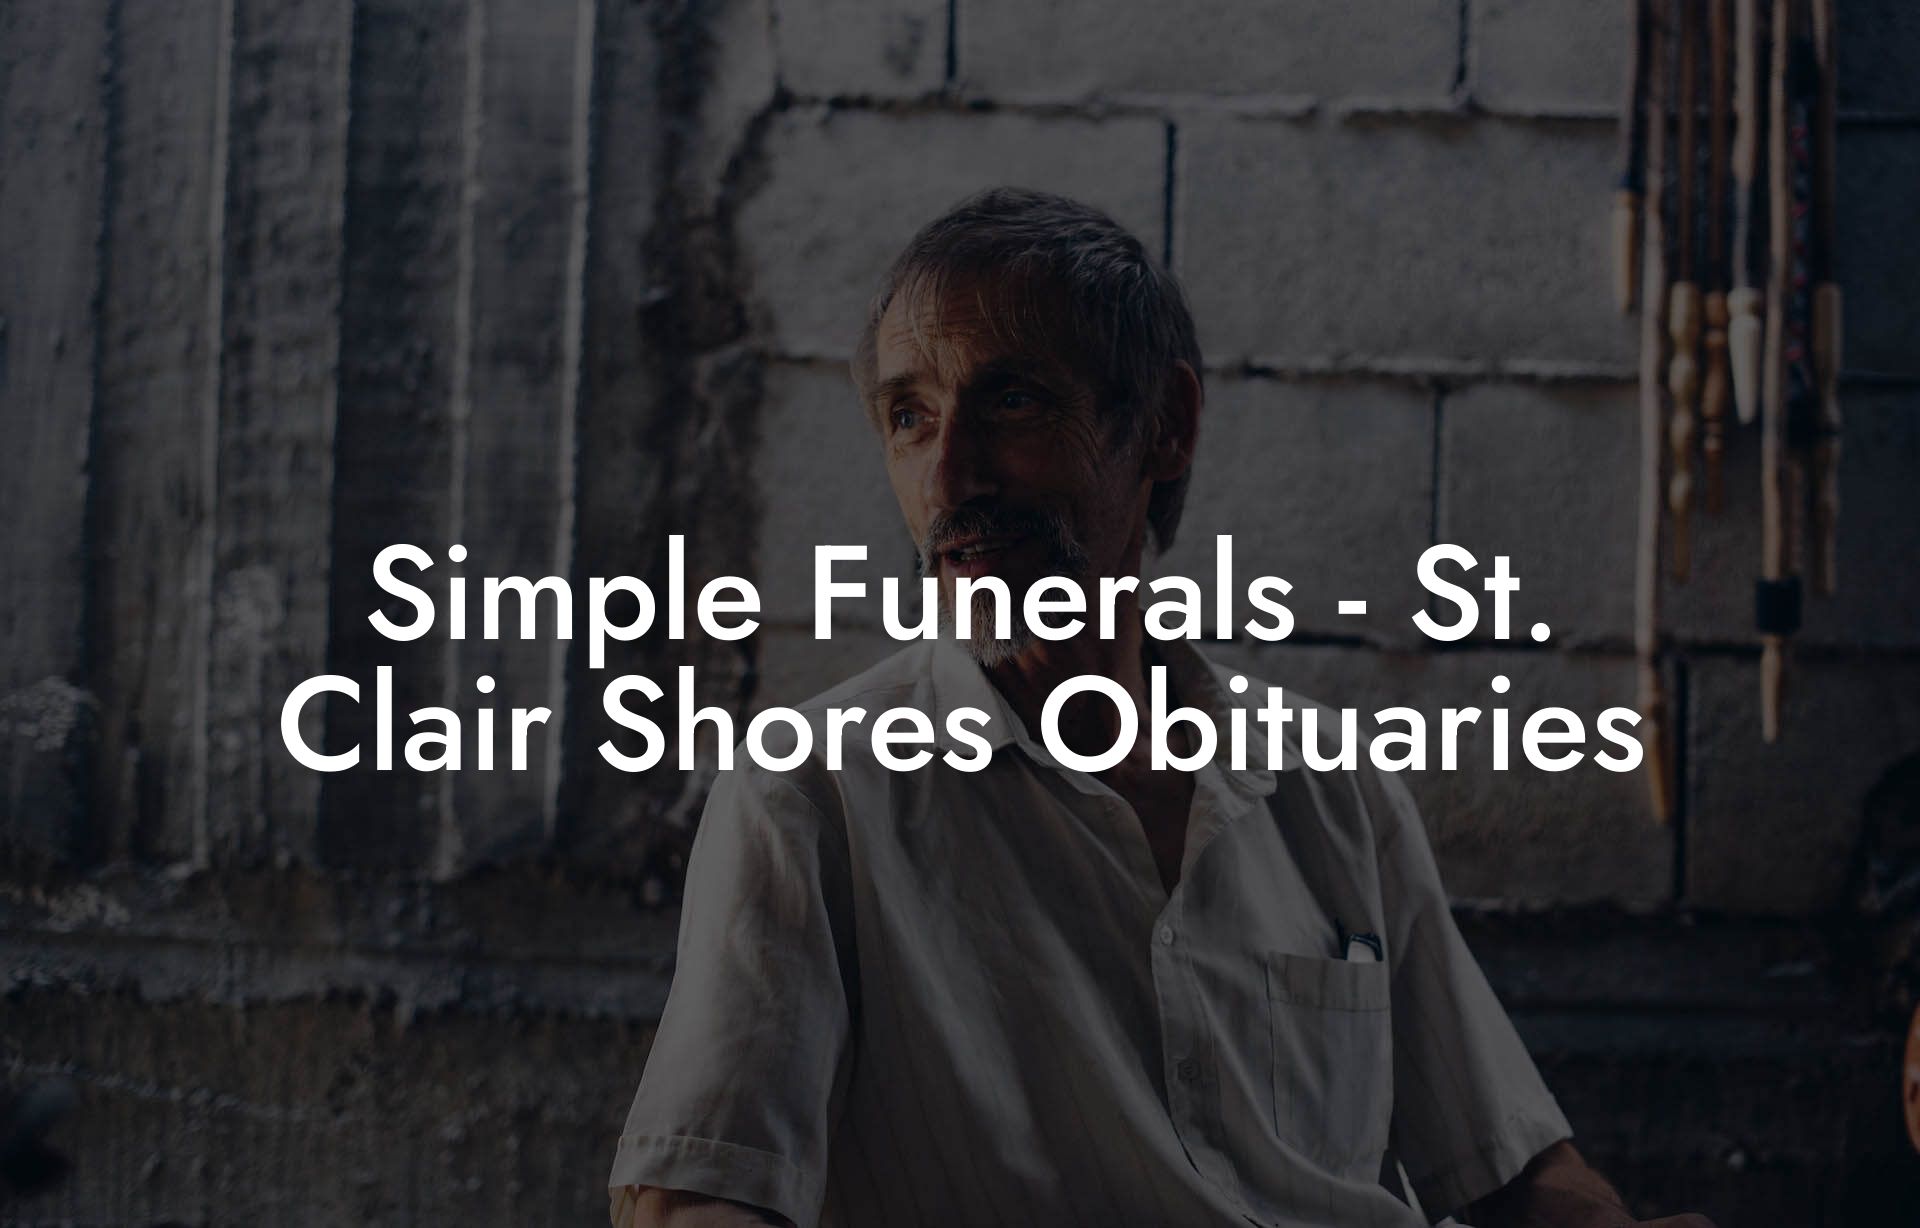 Simple Funerals - St. Clair Shores Obituaries